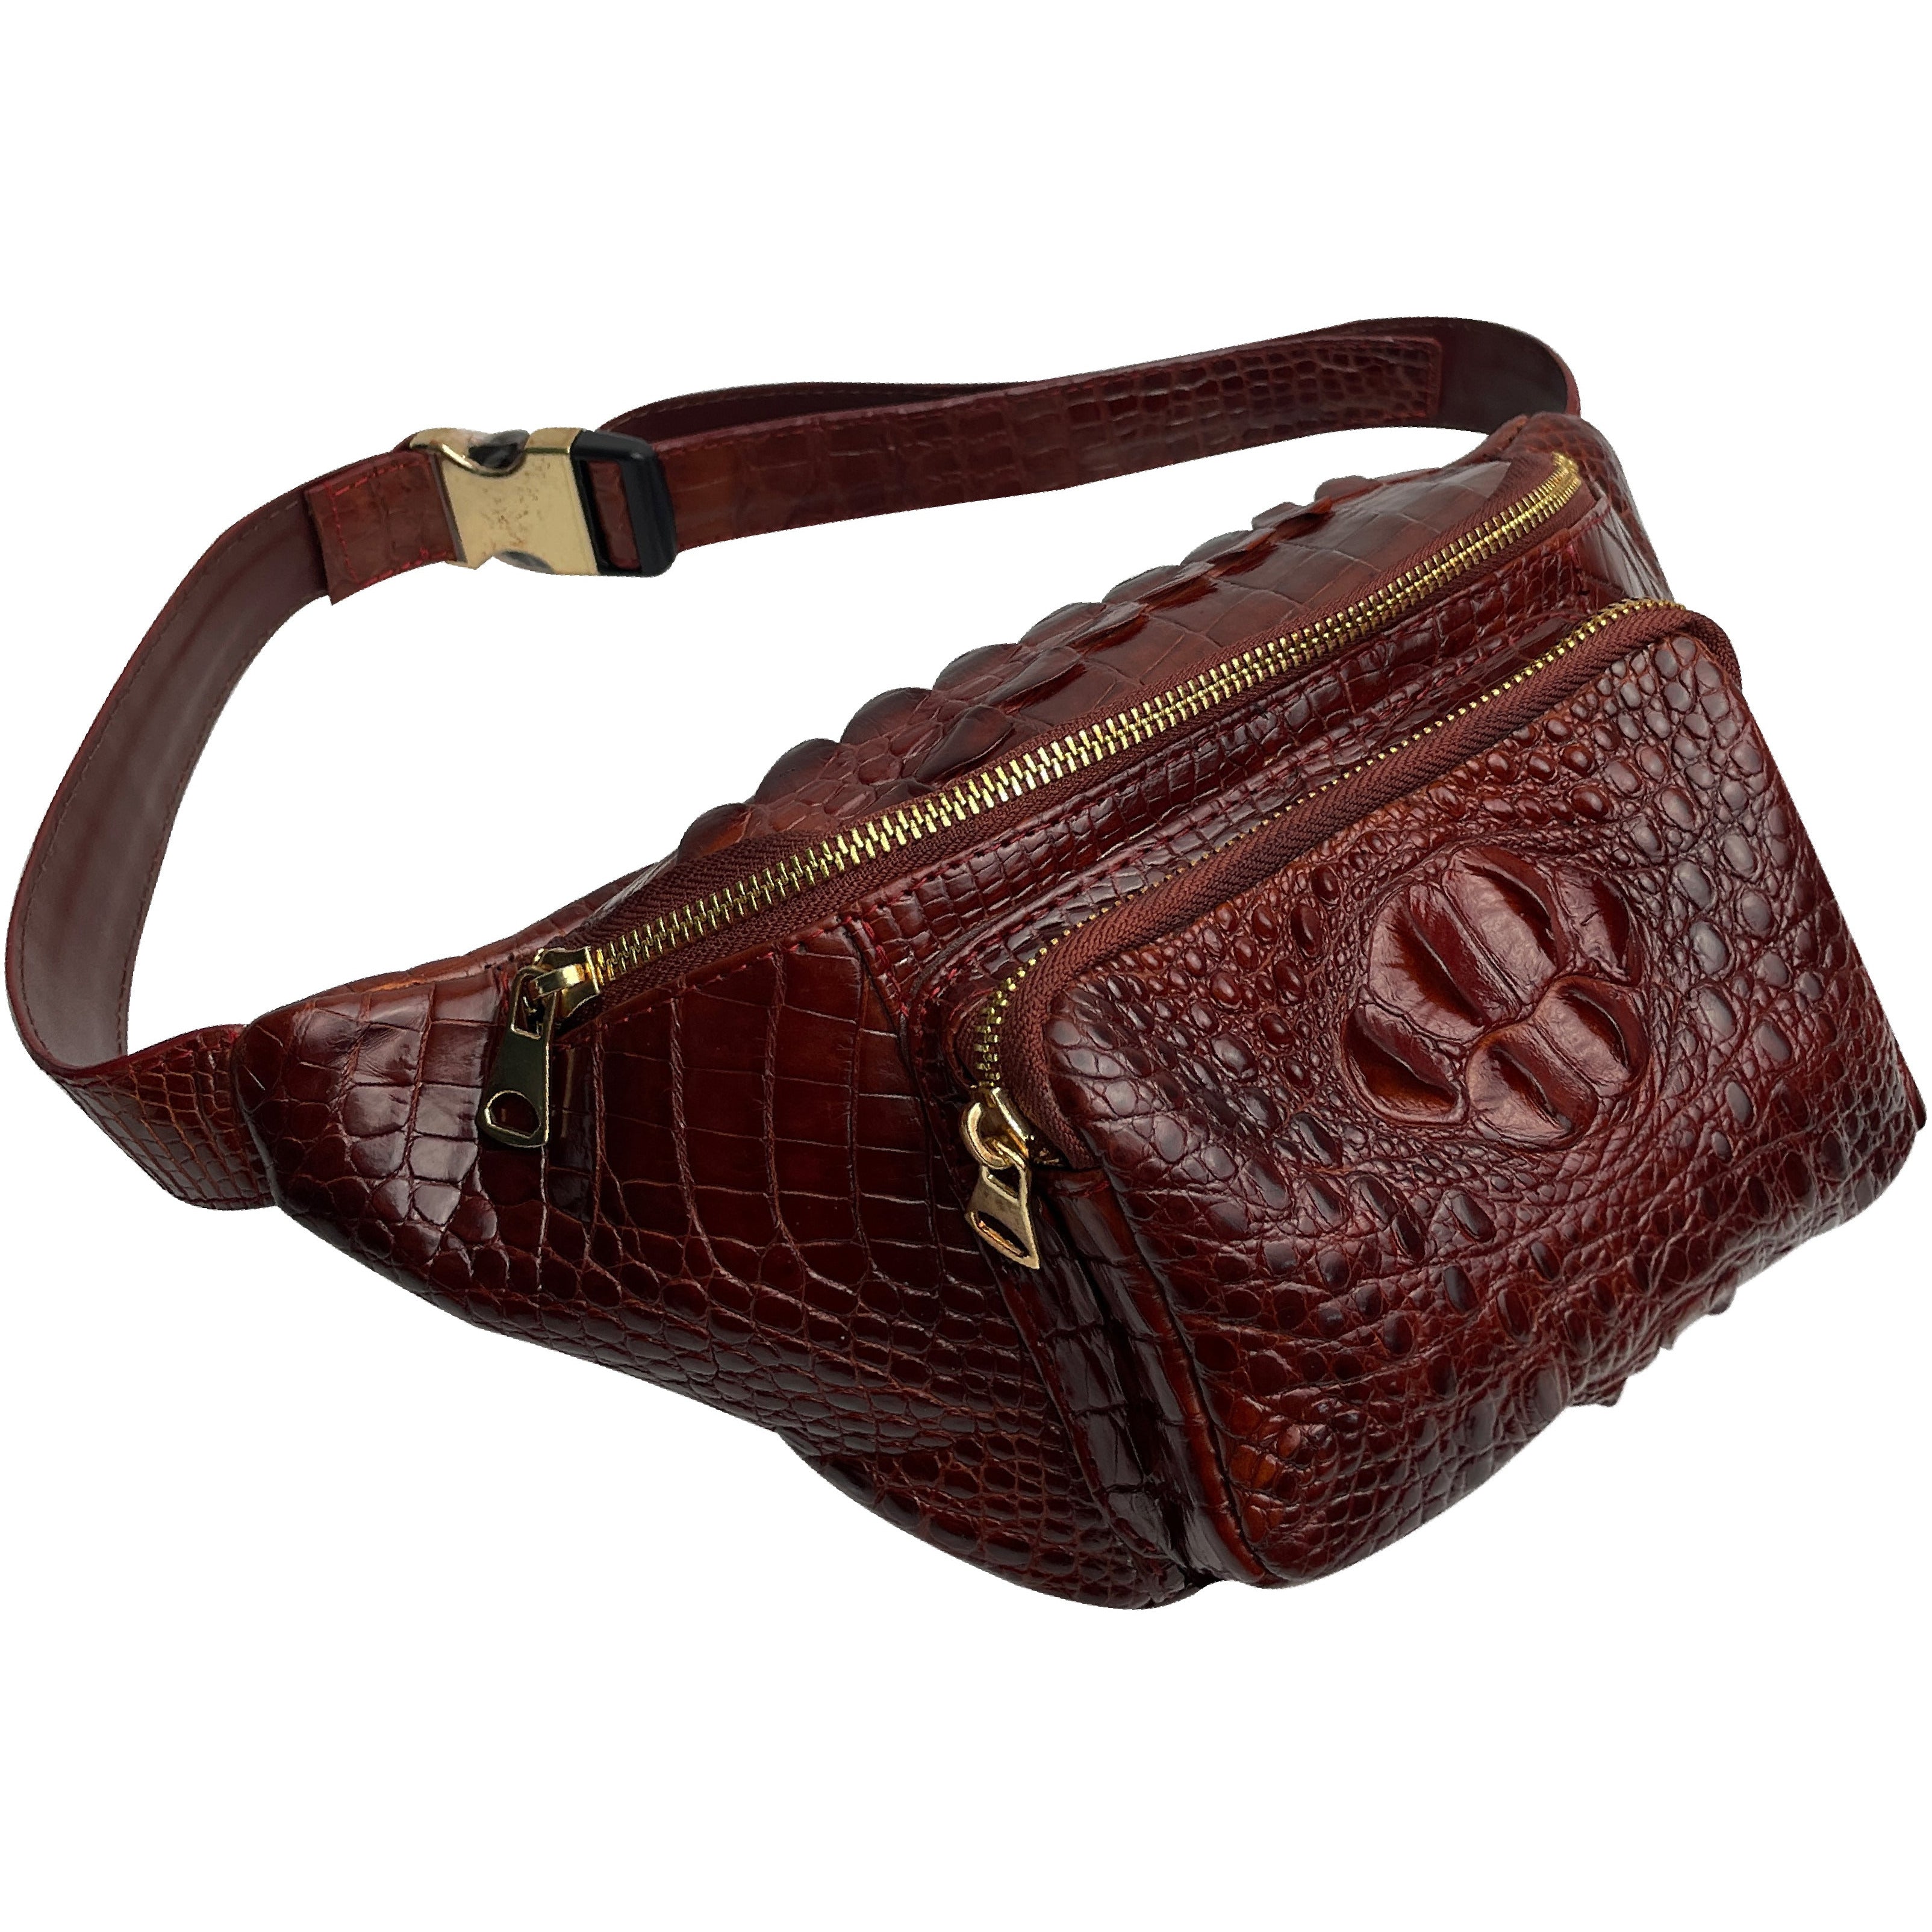 Brown Crocodile Leather Belt Bag, Leather Fanny Pack, Adjustable Cross